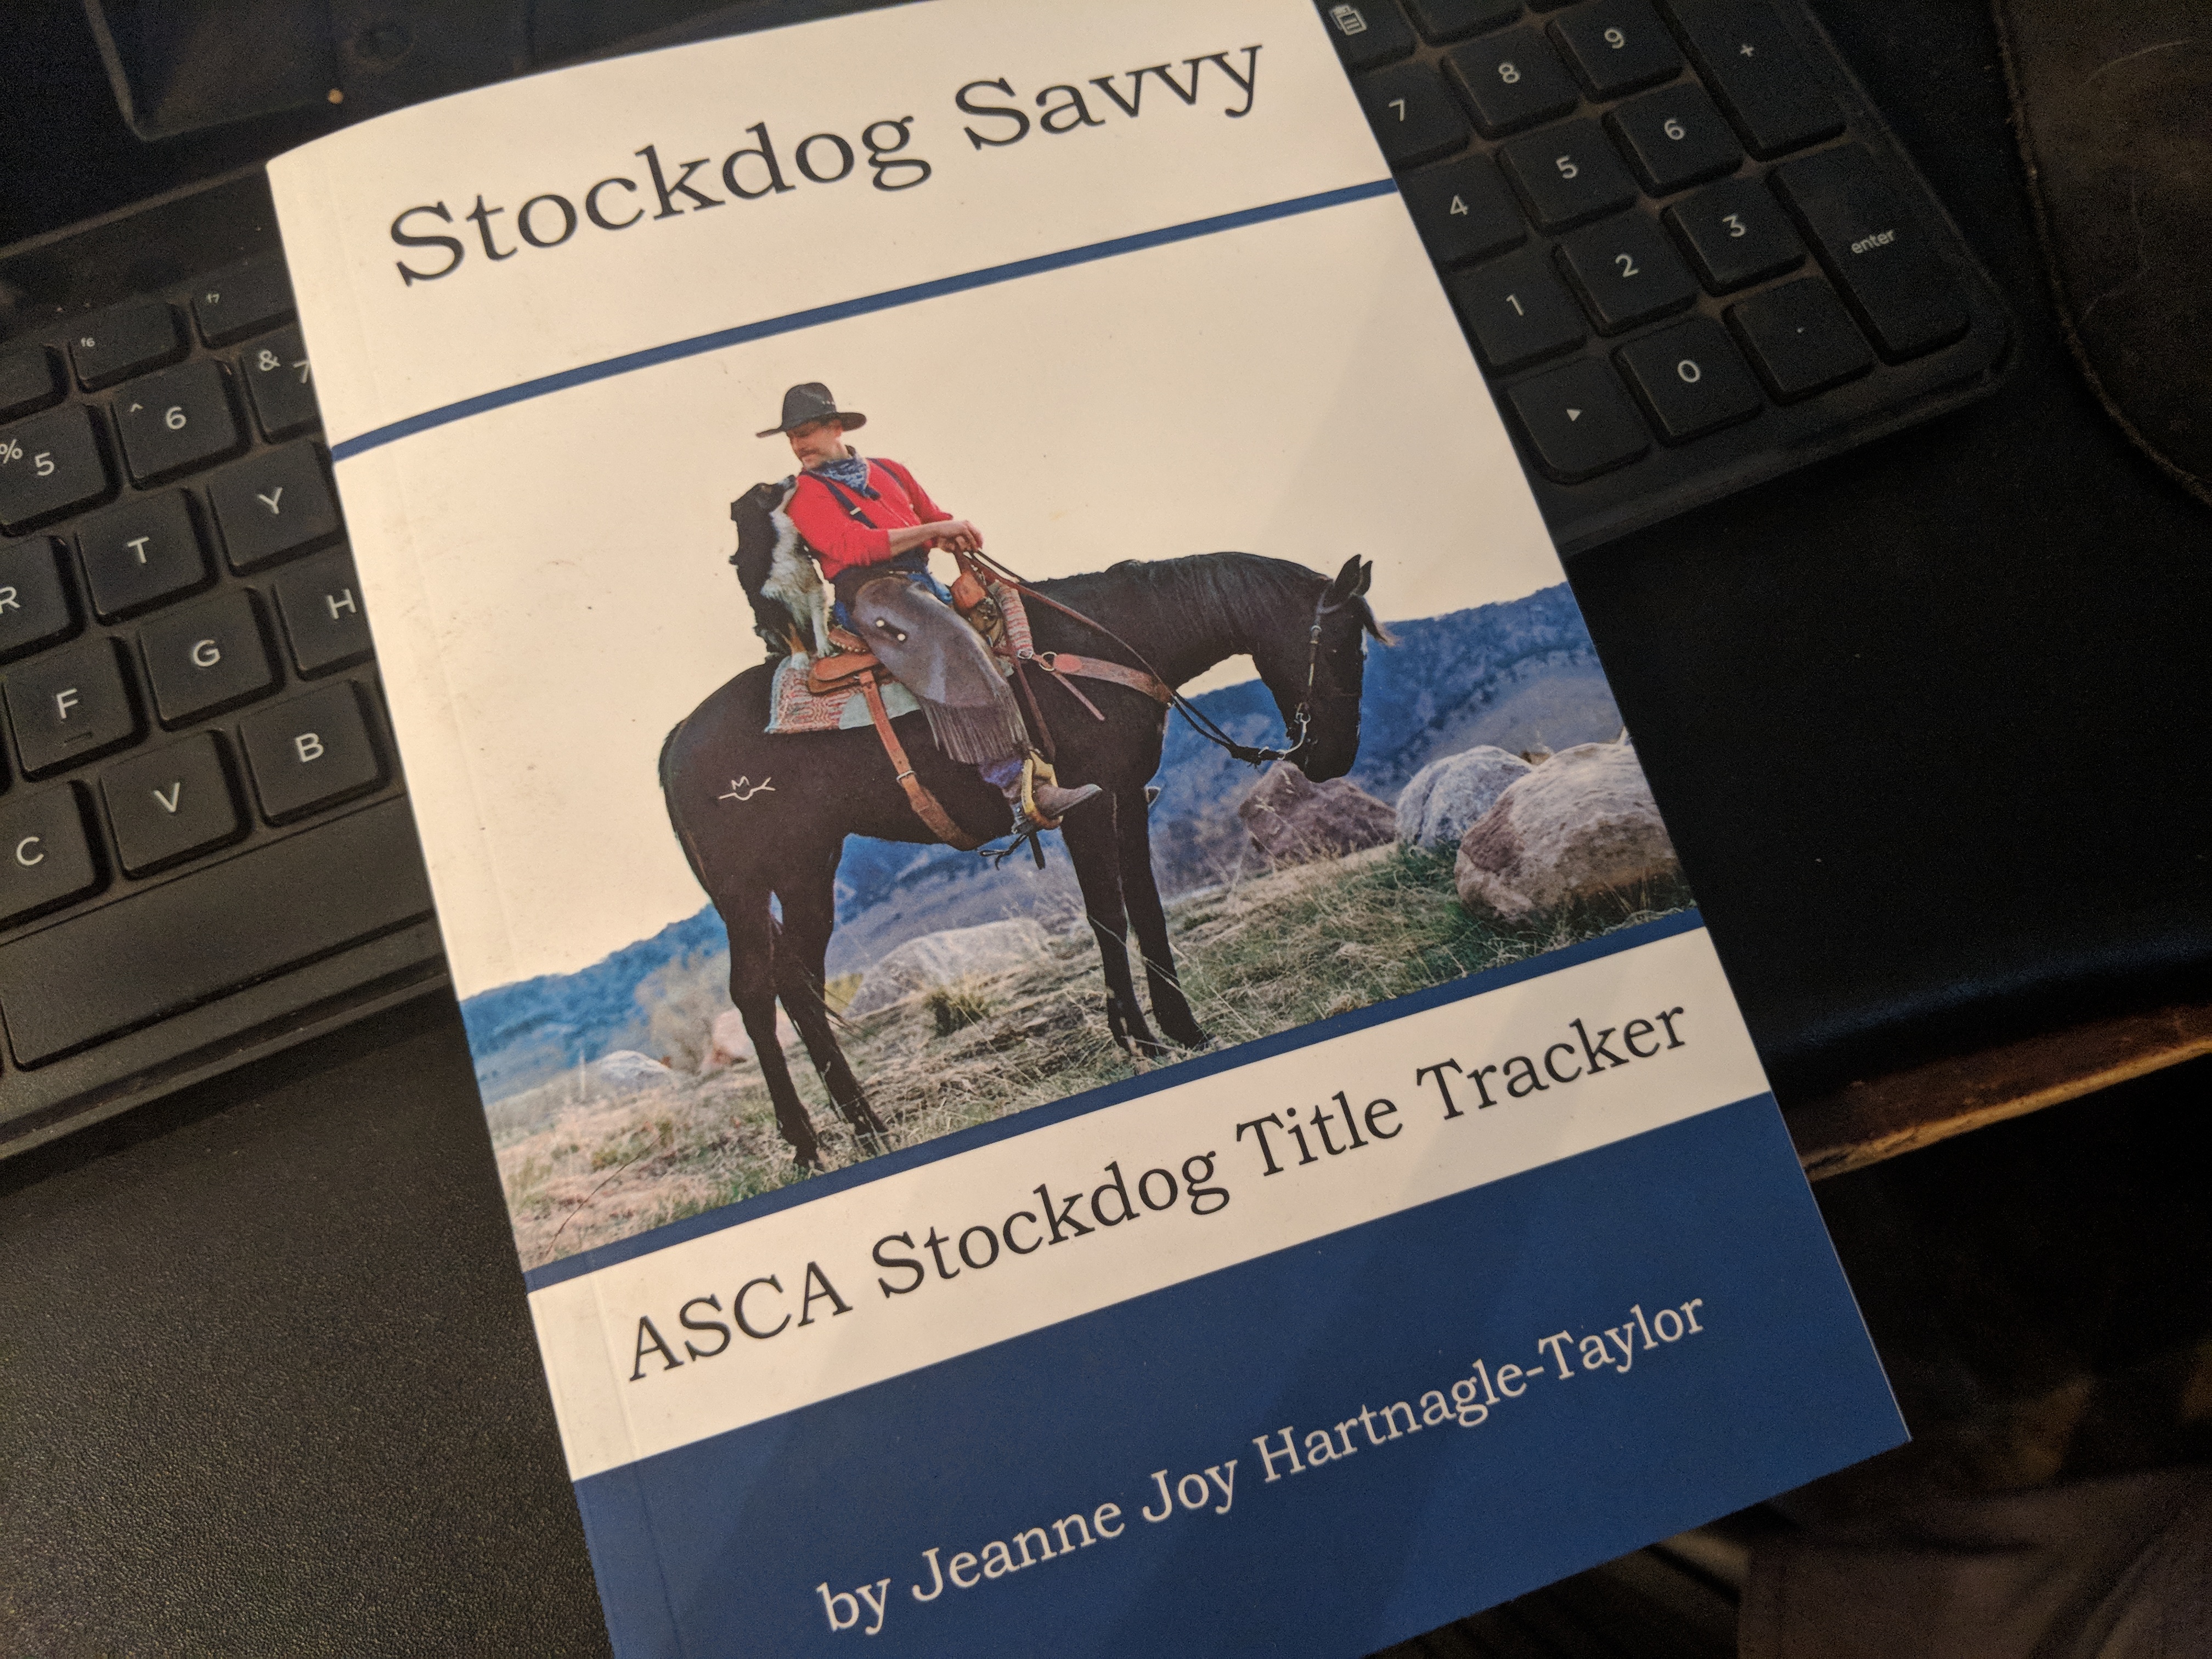 Stockdog Savvy – ASCA Stockdog Title Tracker